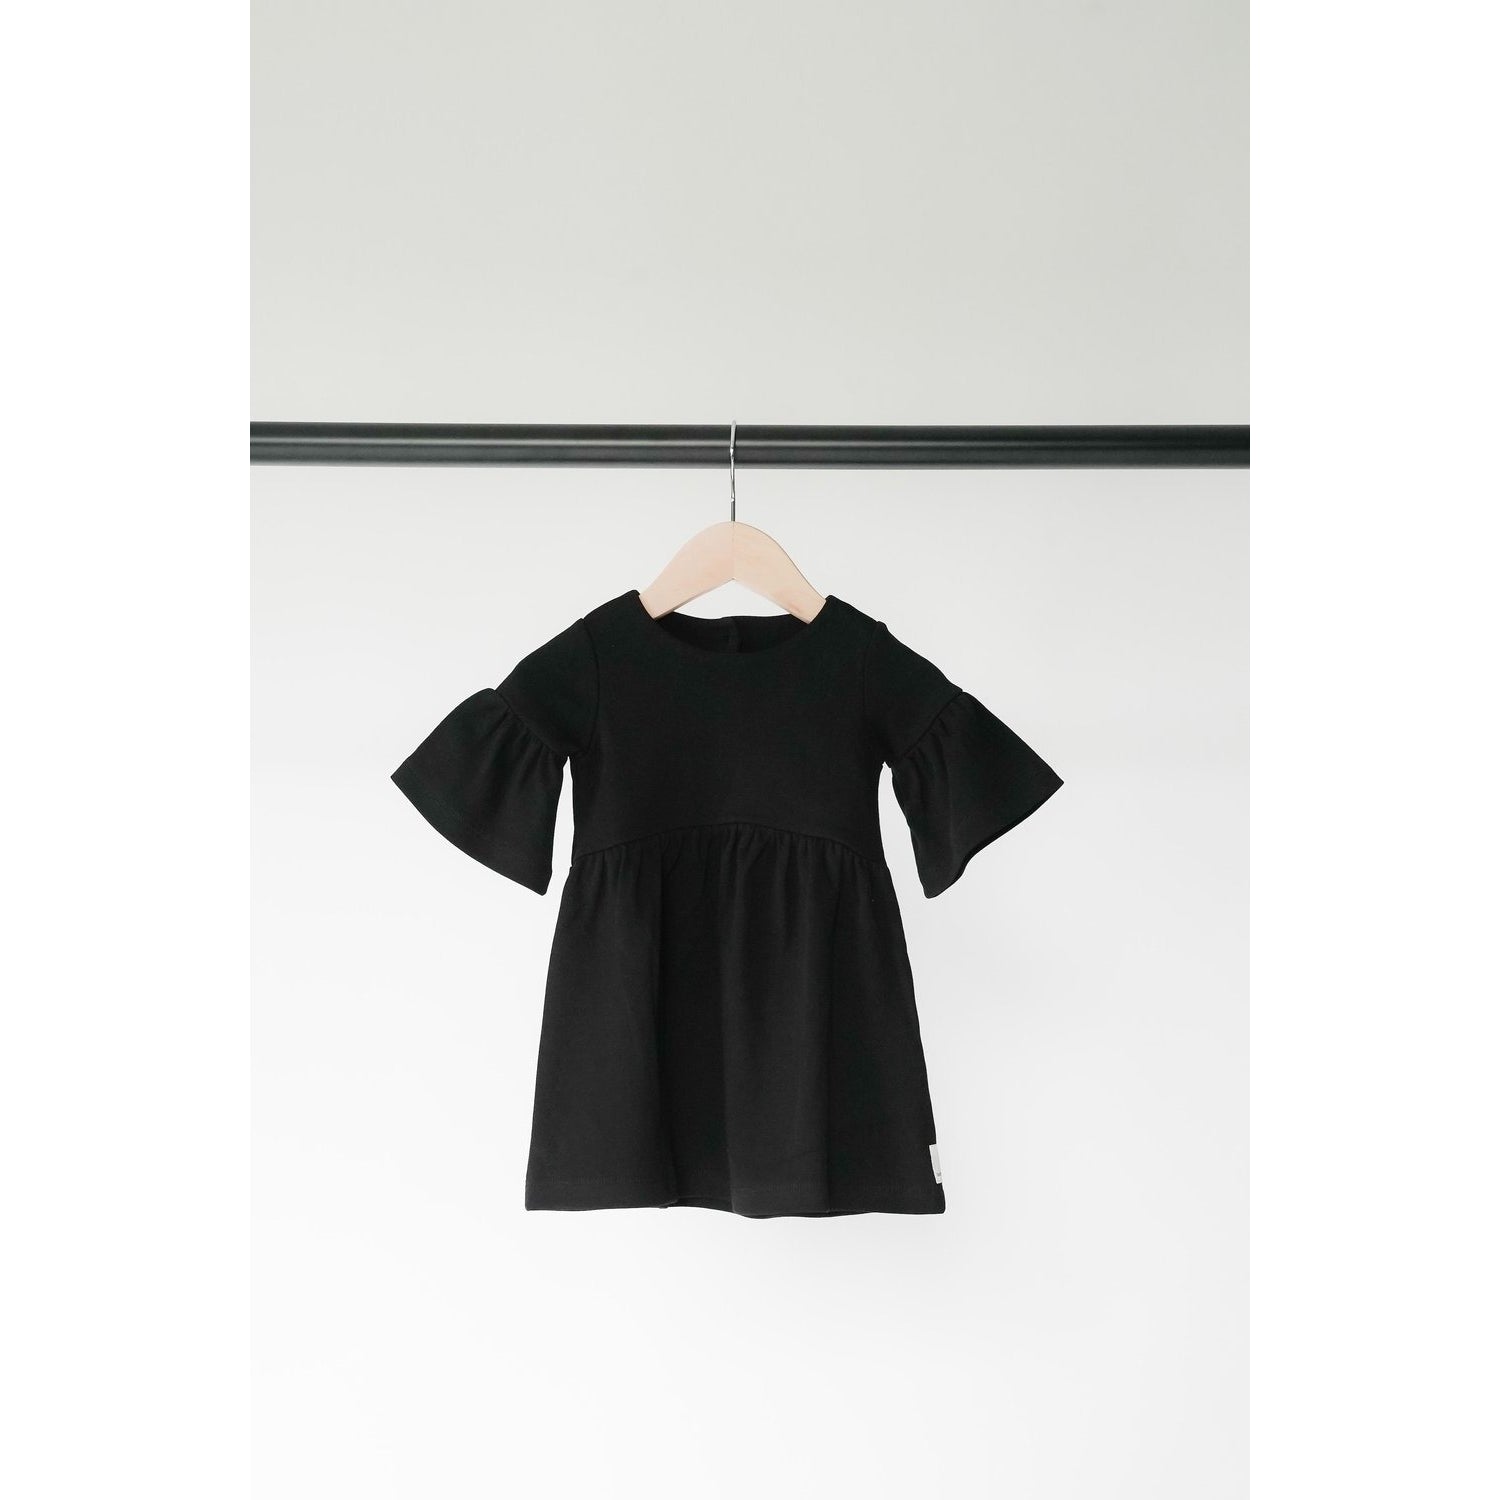 willow dress in black